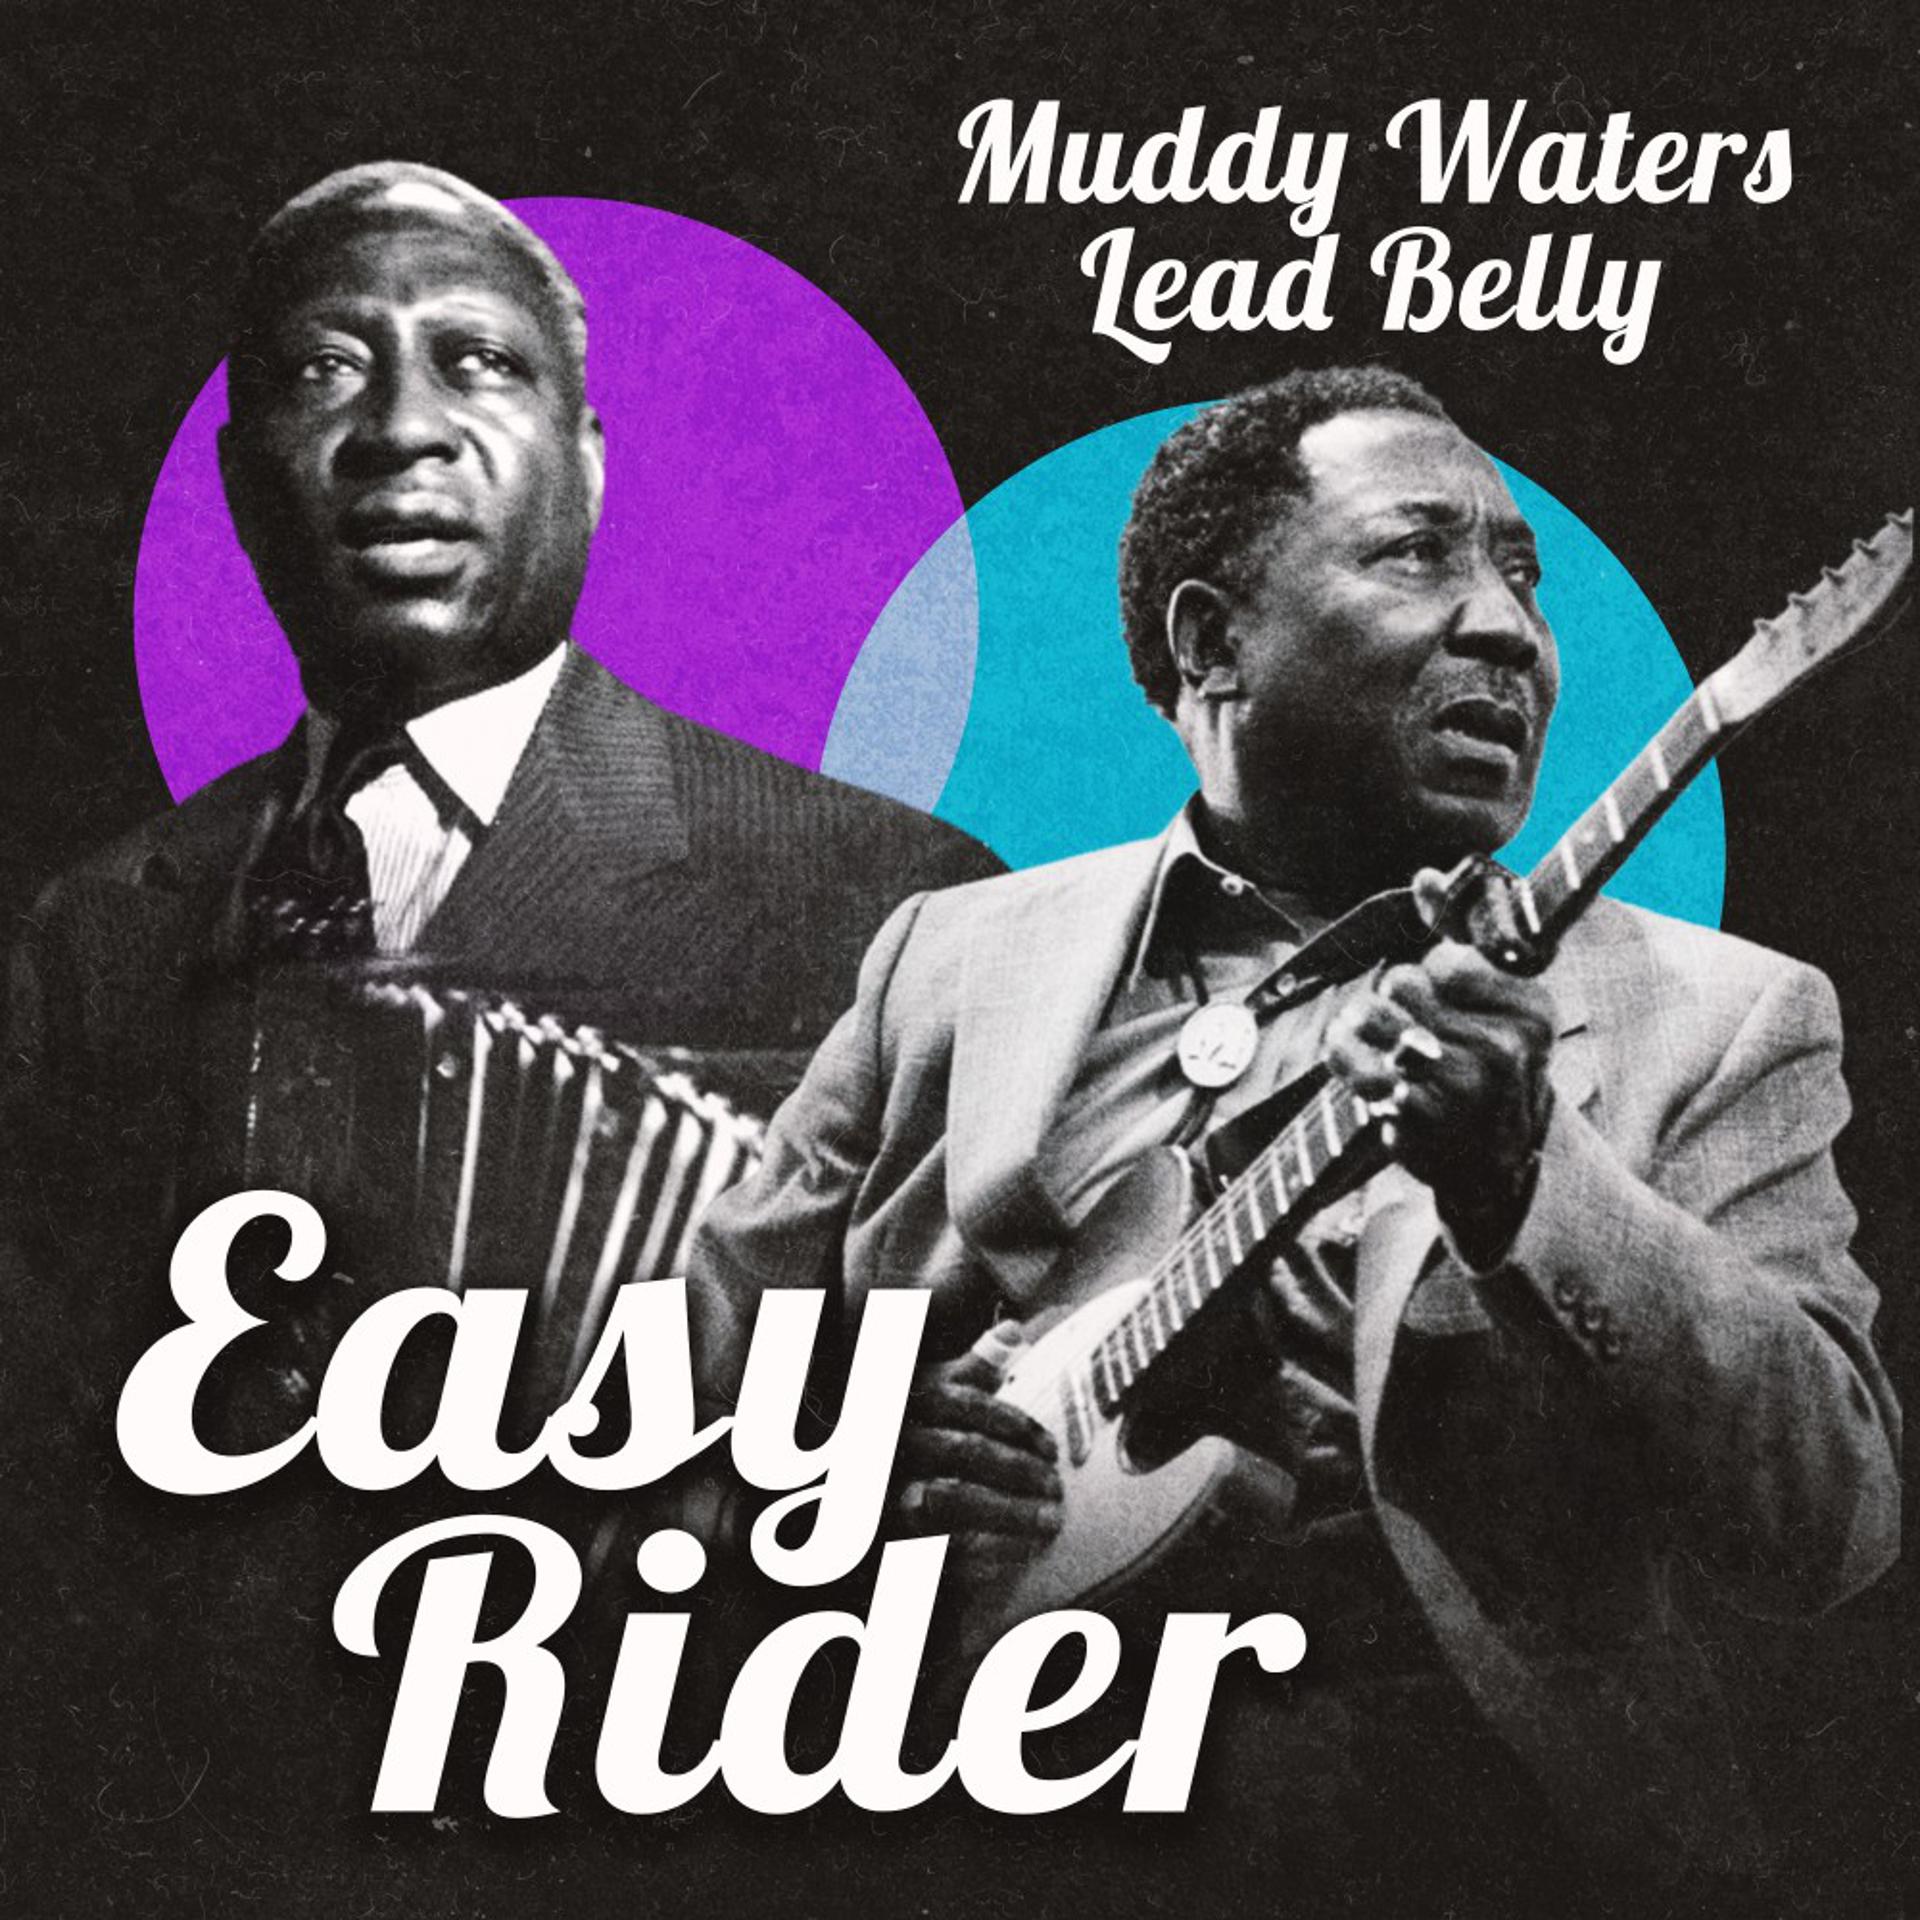 Постер альбома Easy Rider